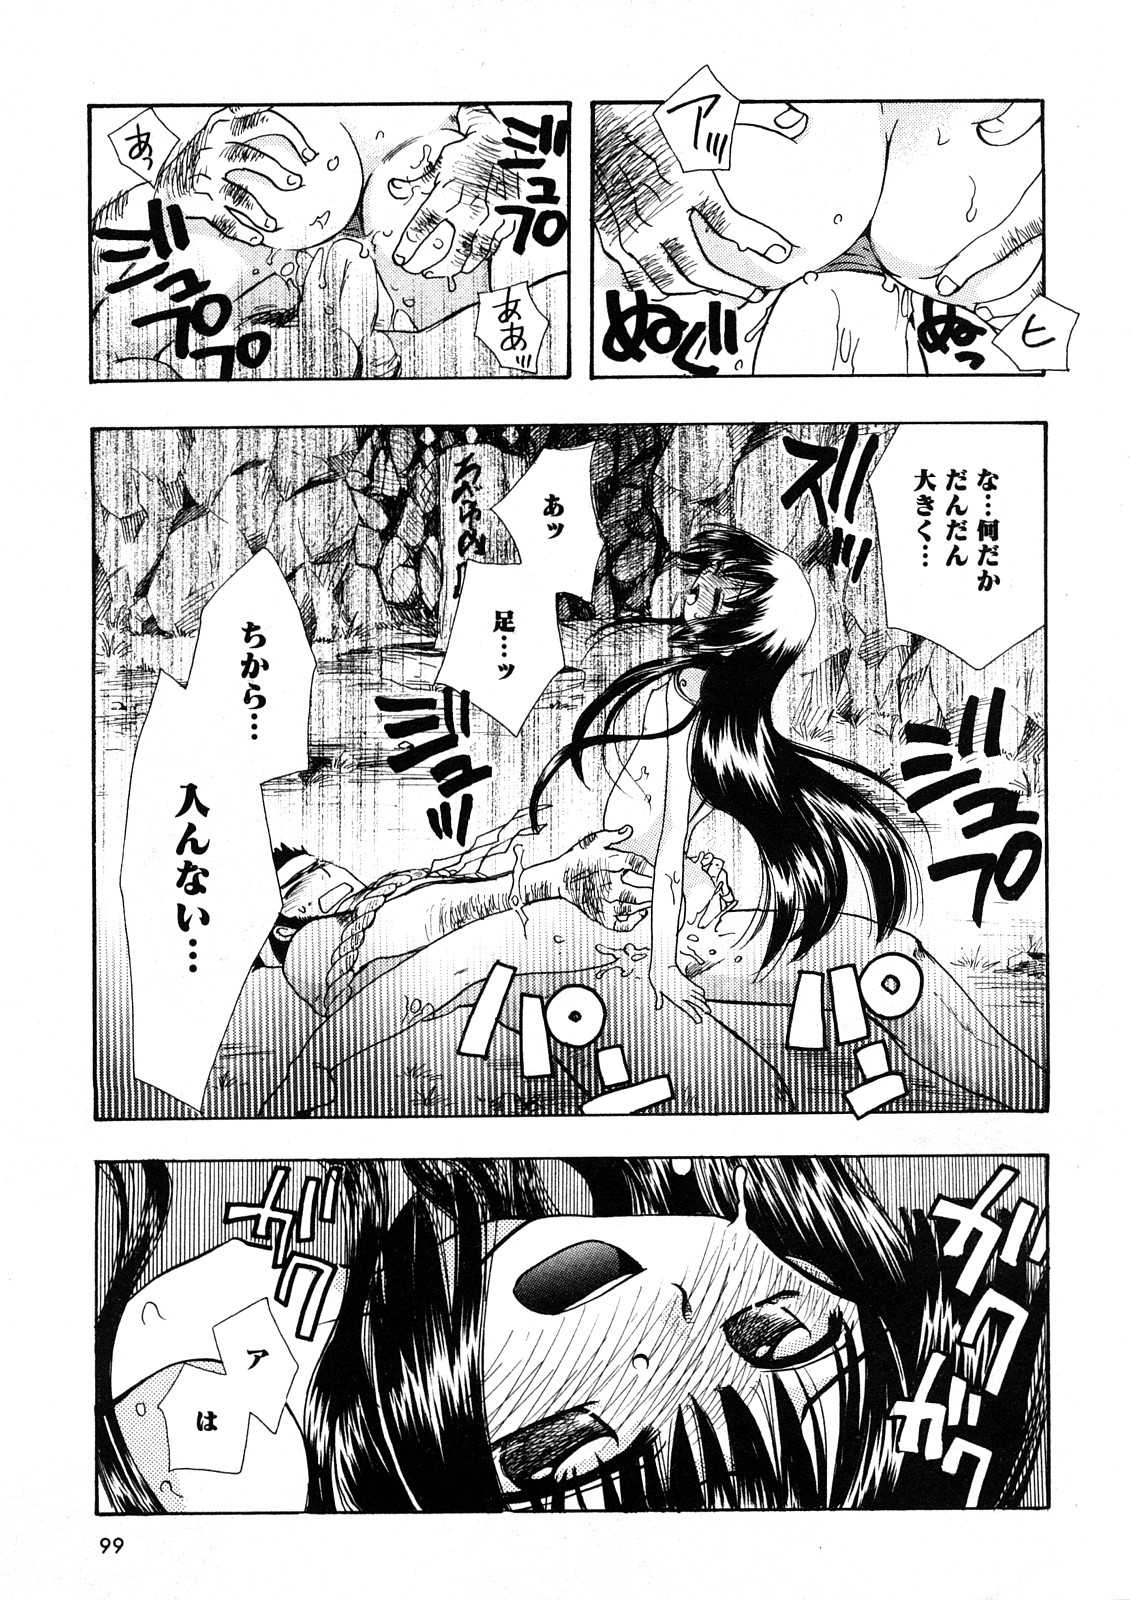 (Adult Manga) [Magazine] Ran-Oh! vol.4 